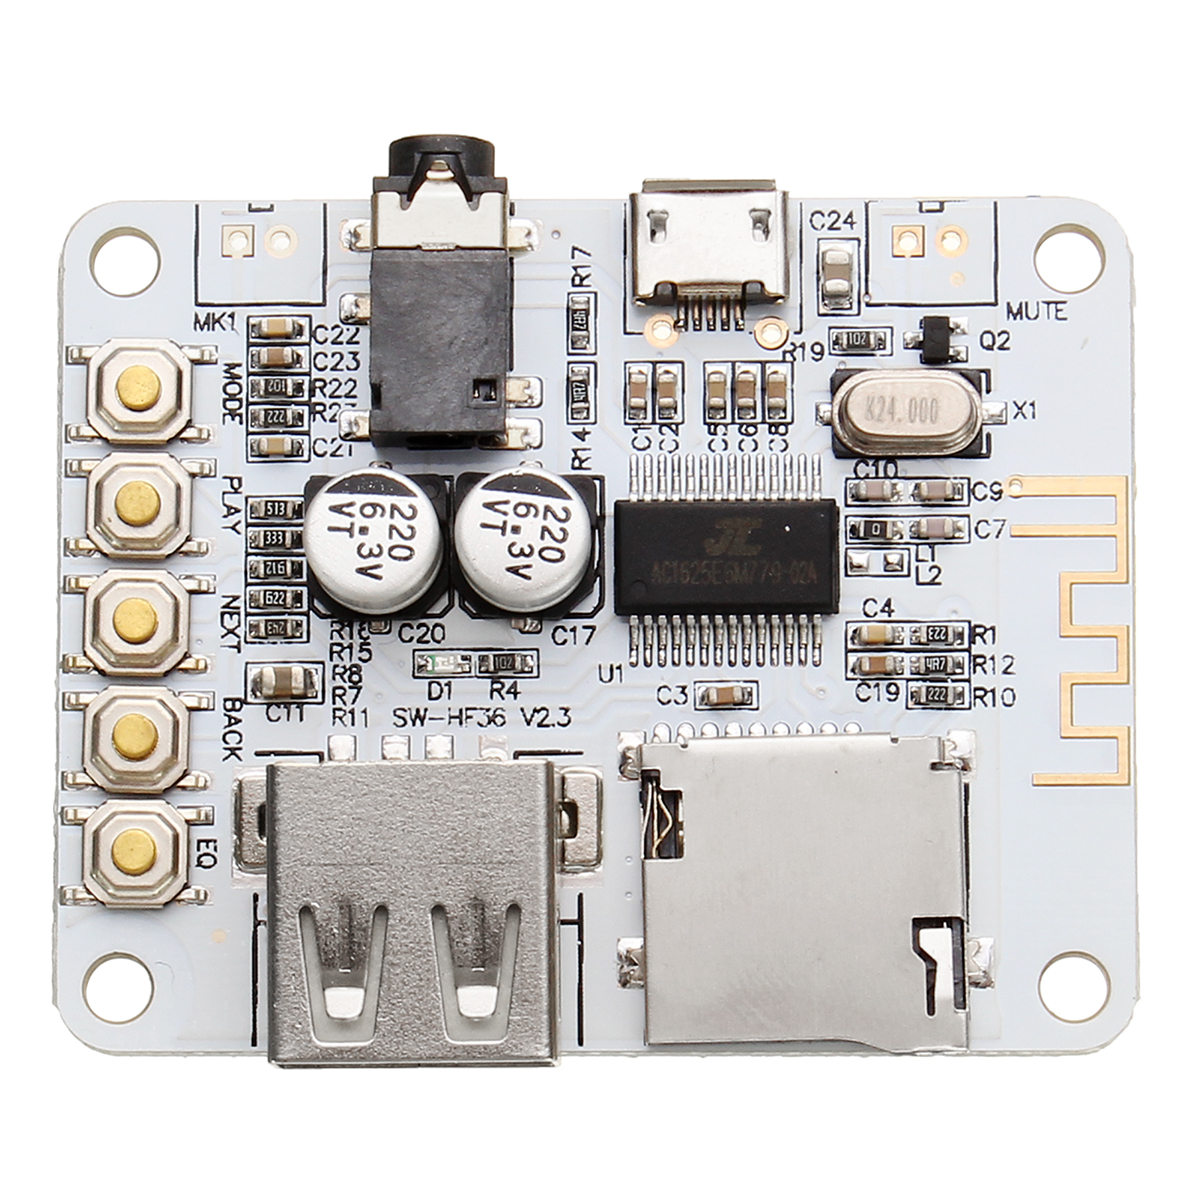 SANWU® Bluetooth Audio Receiver Digital Amplifier Board with USB Port TF Card Slot Decoding Play